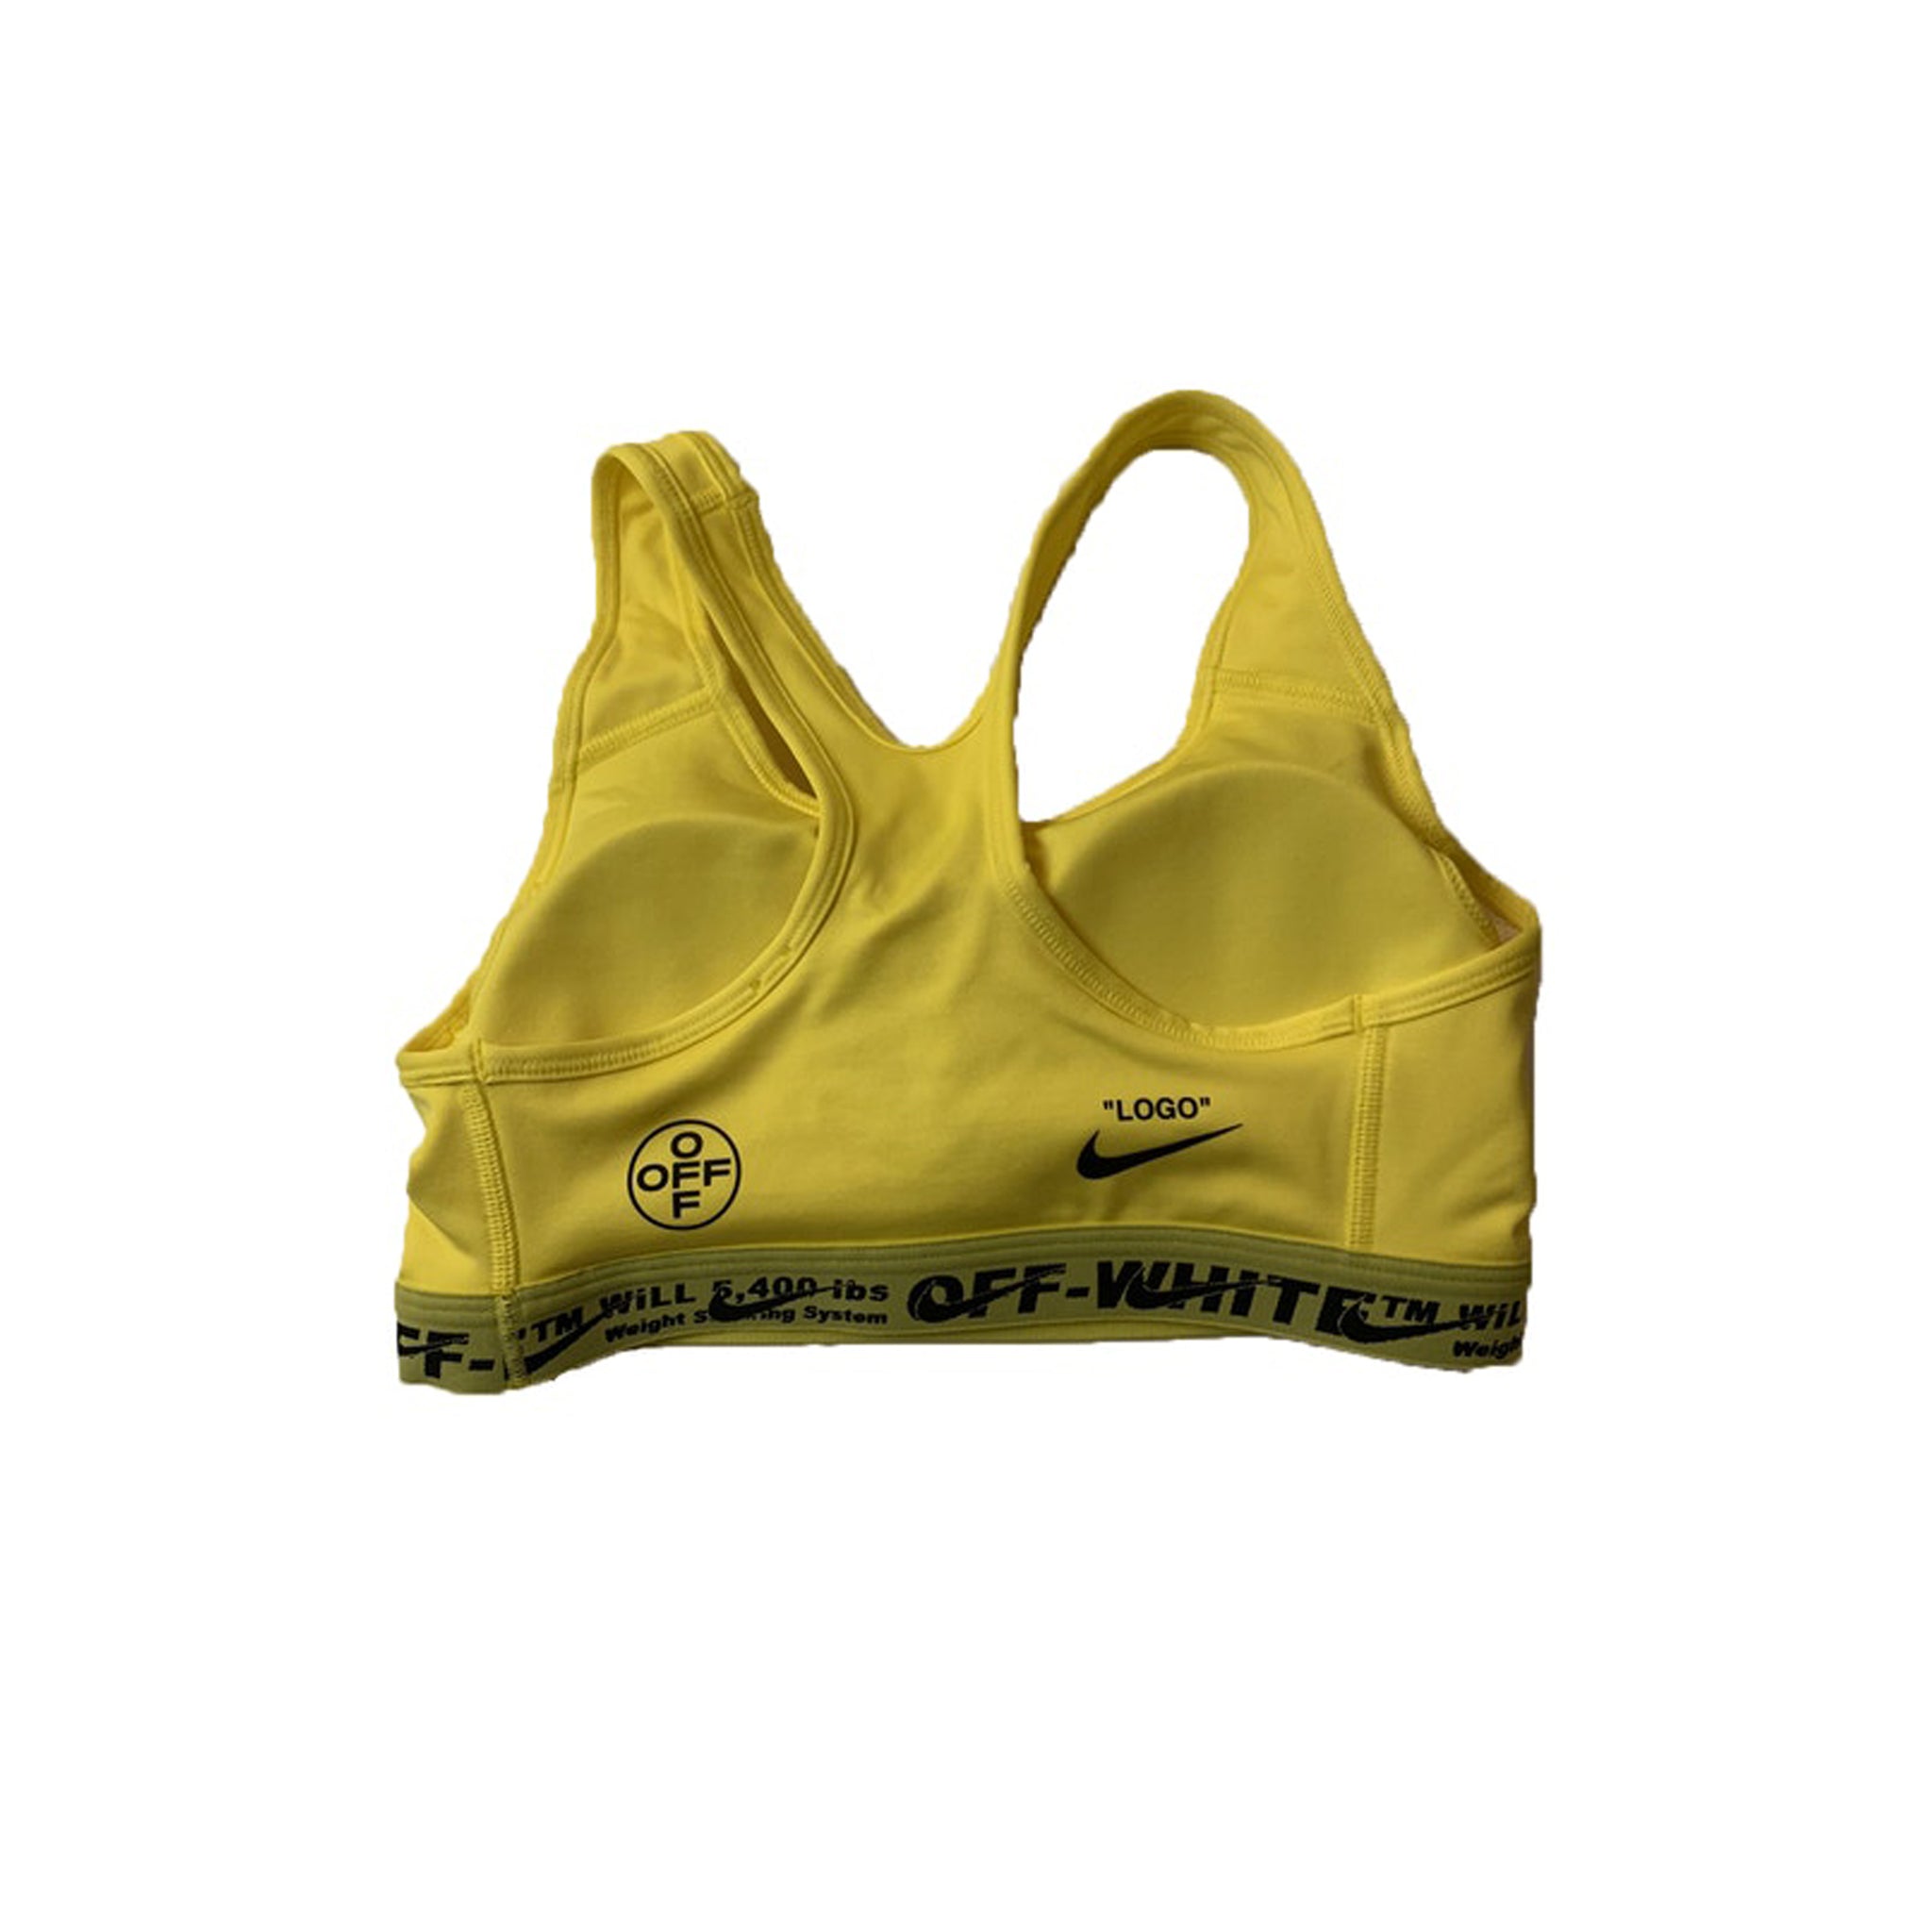 off white sports bra yellow